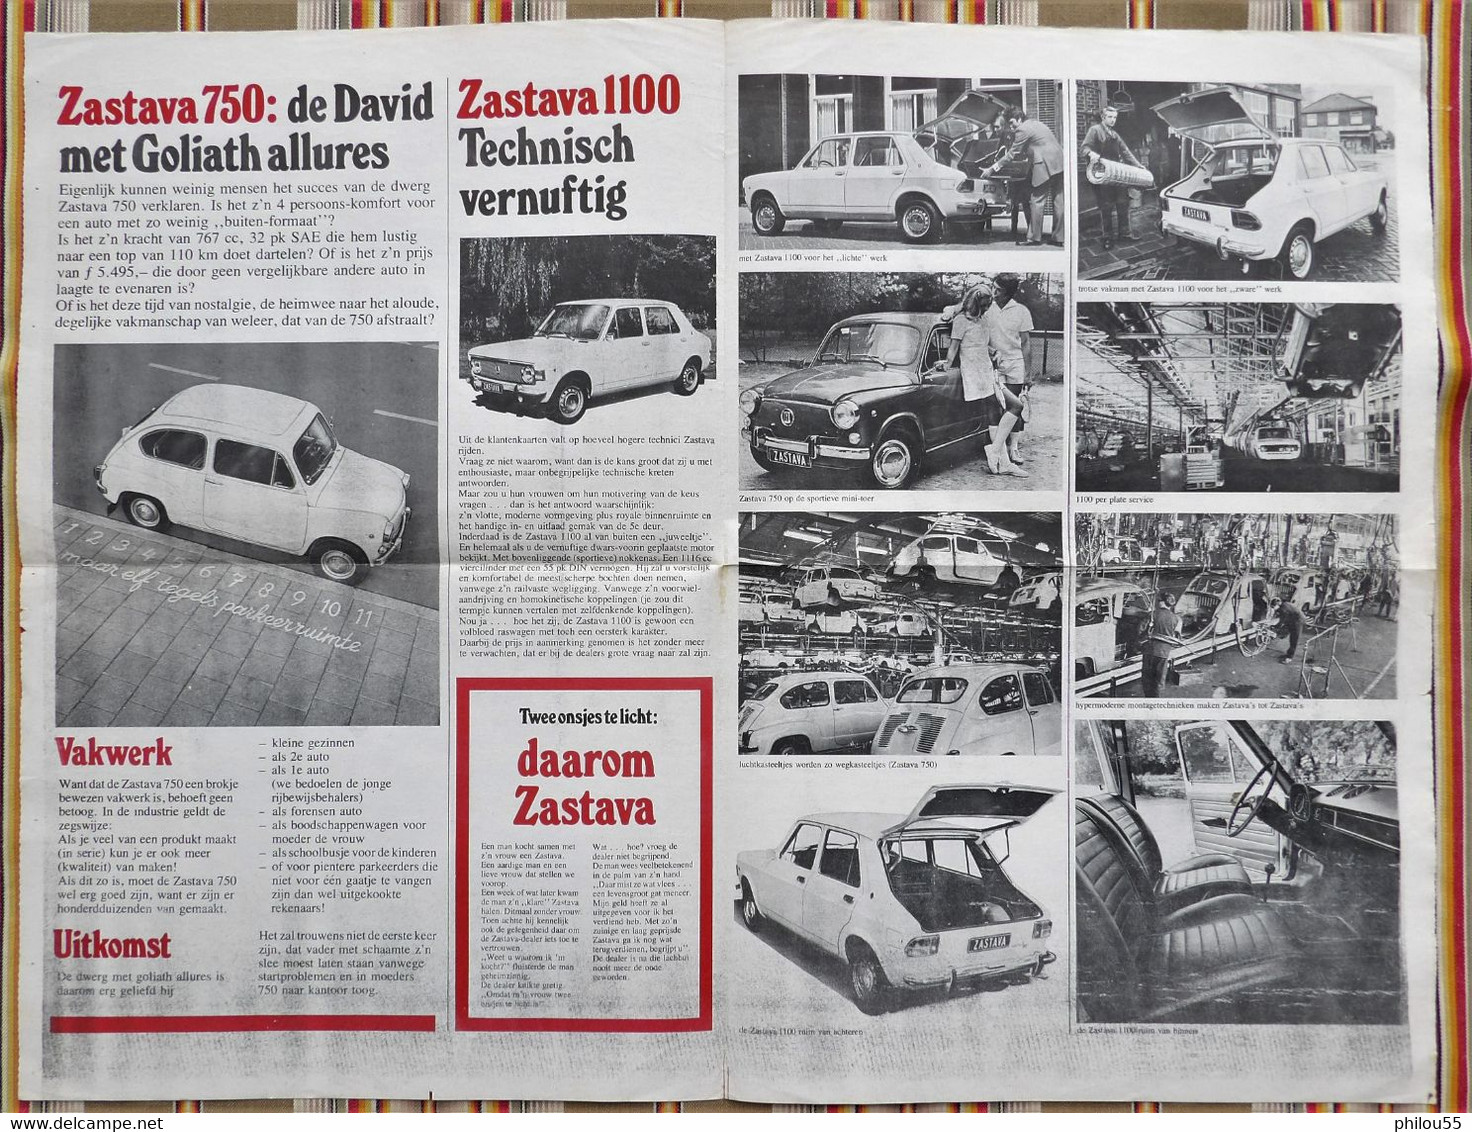 Journal Zastava Bulletin 1974 - Praktisch